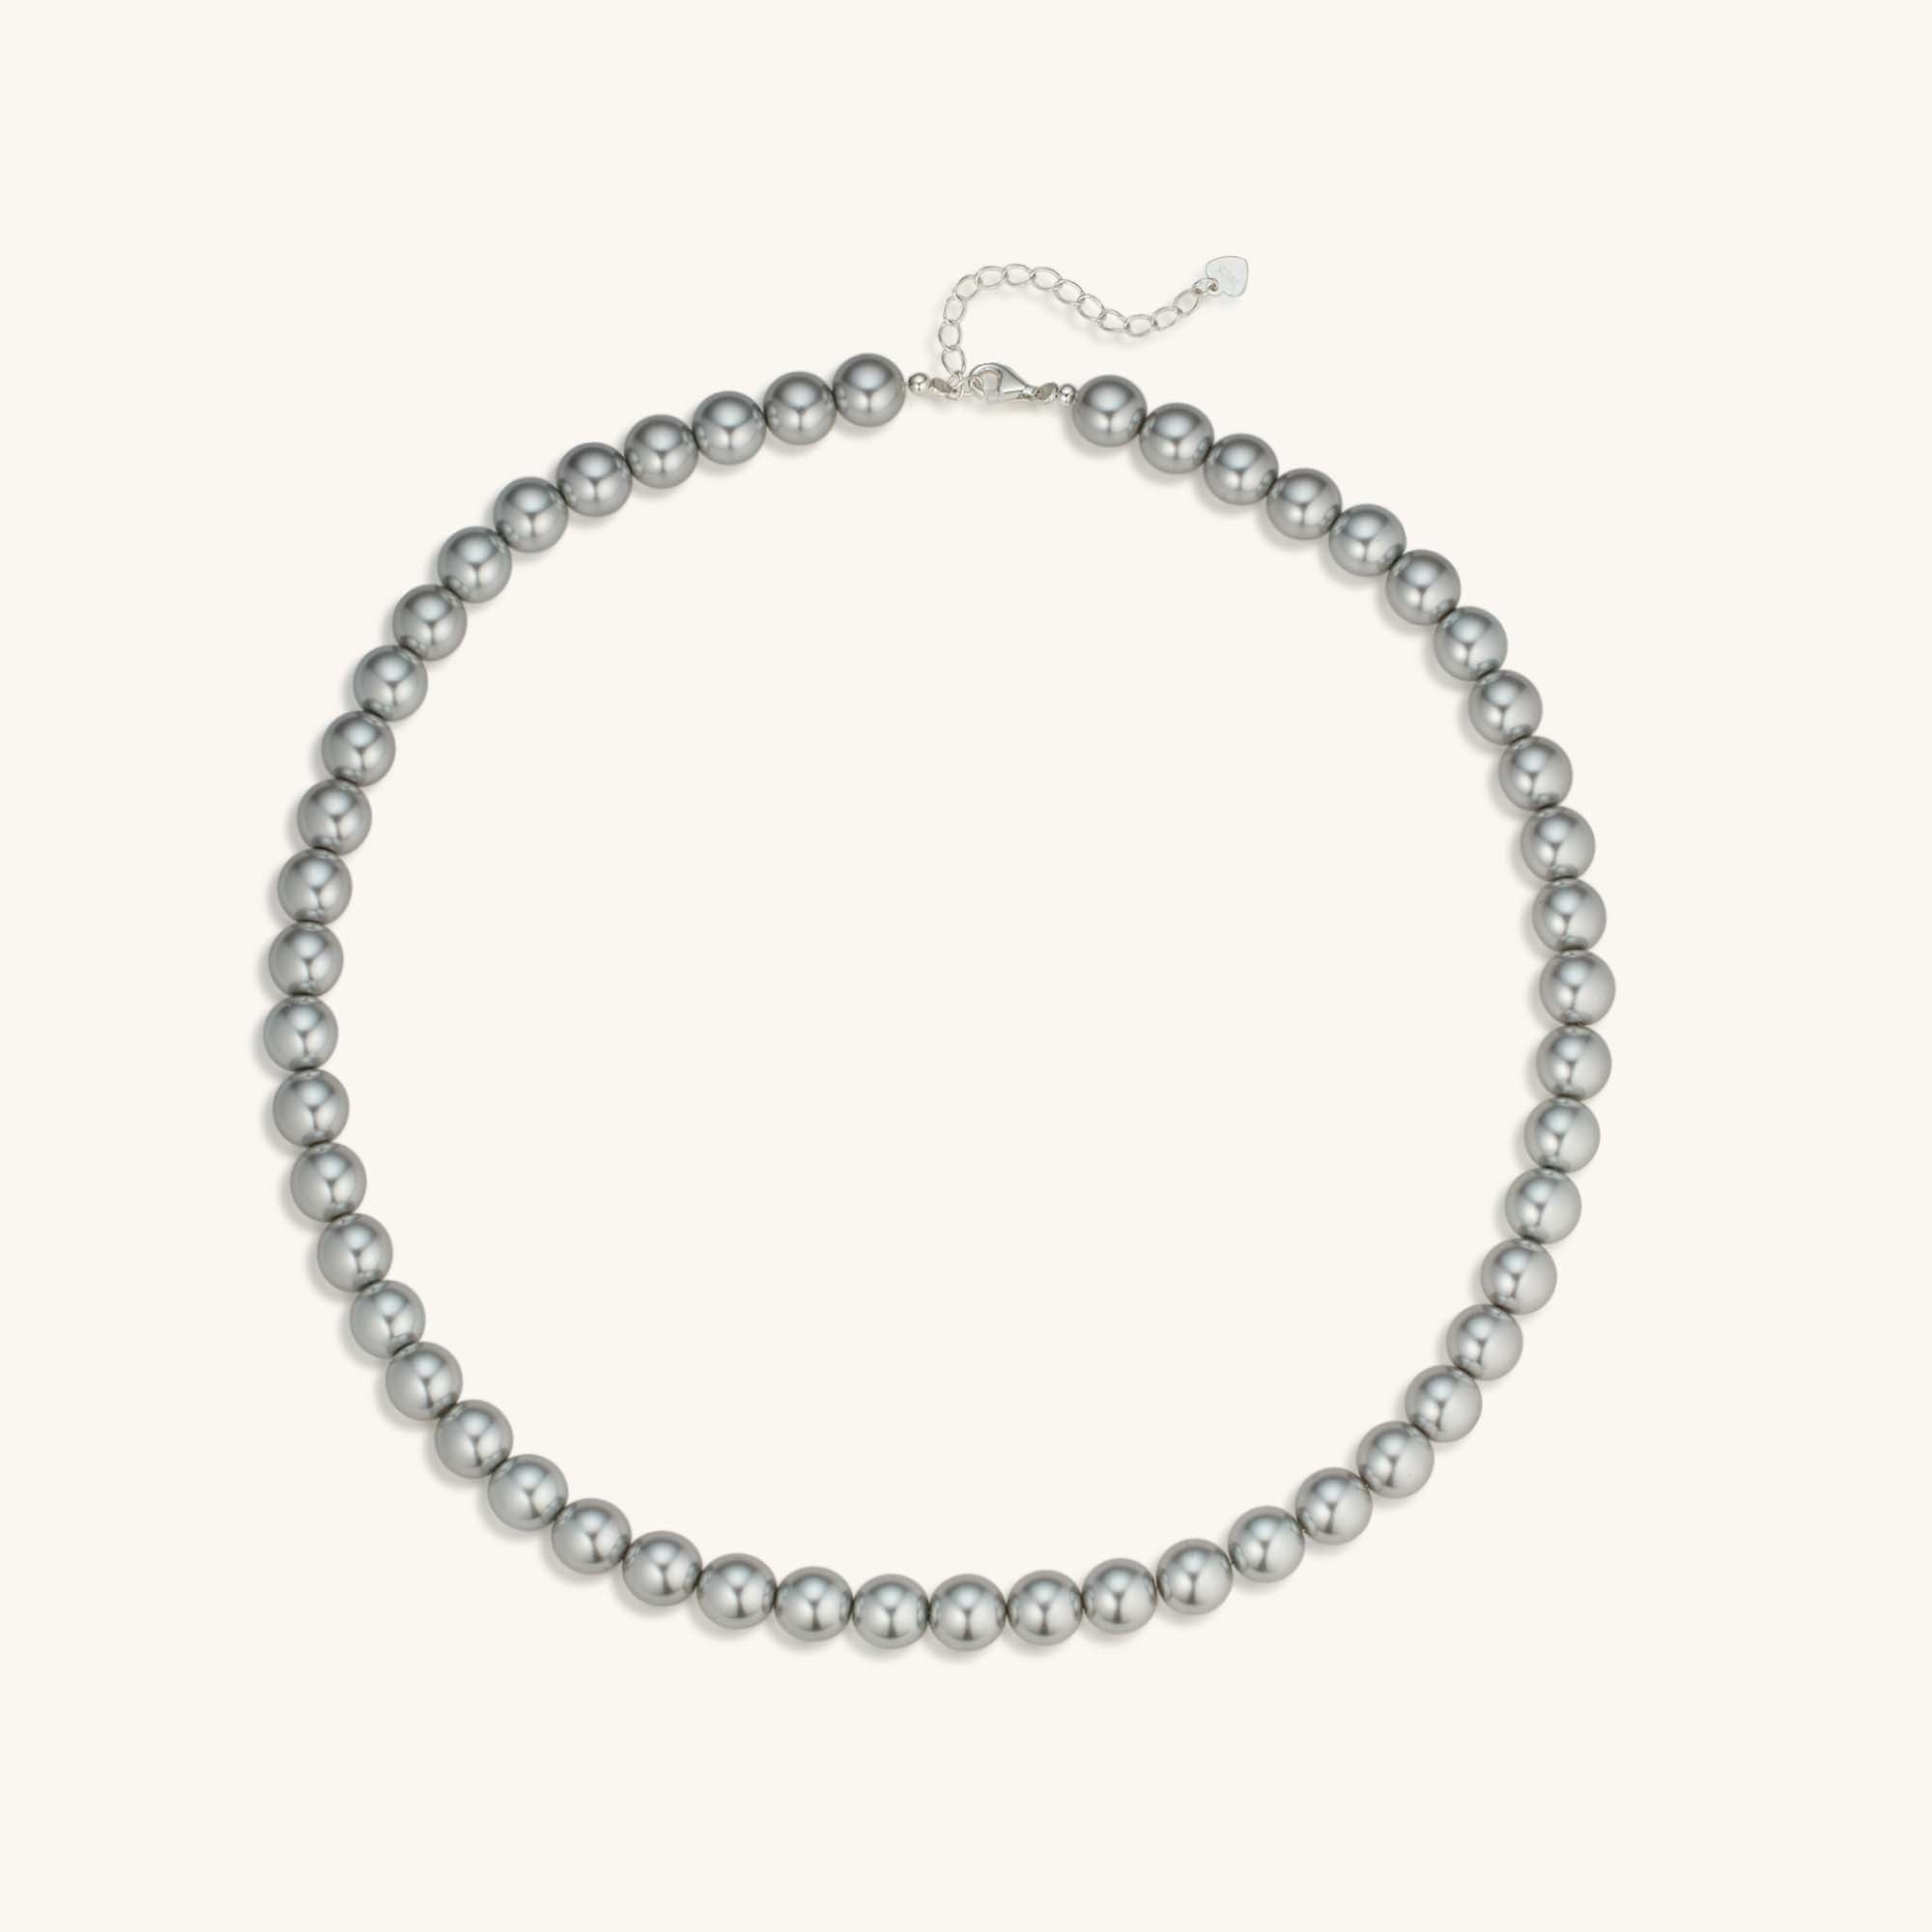 Dark Silver Pearl Choker Necklace for Women - Kira LaLa